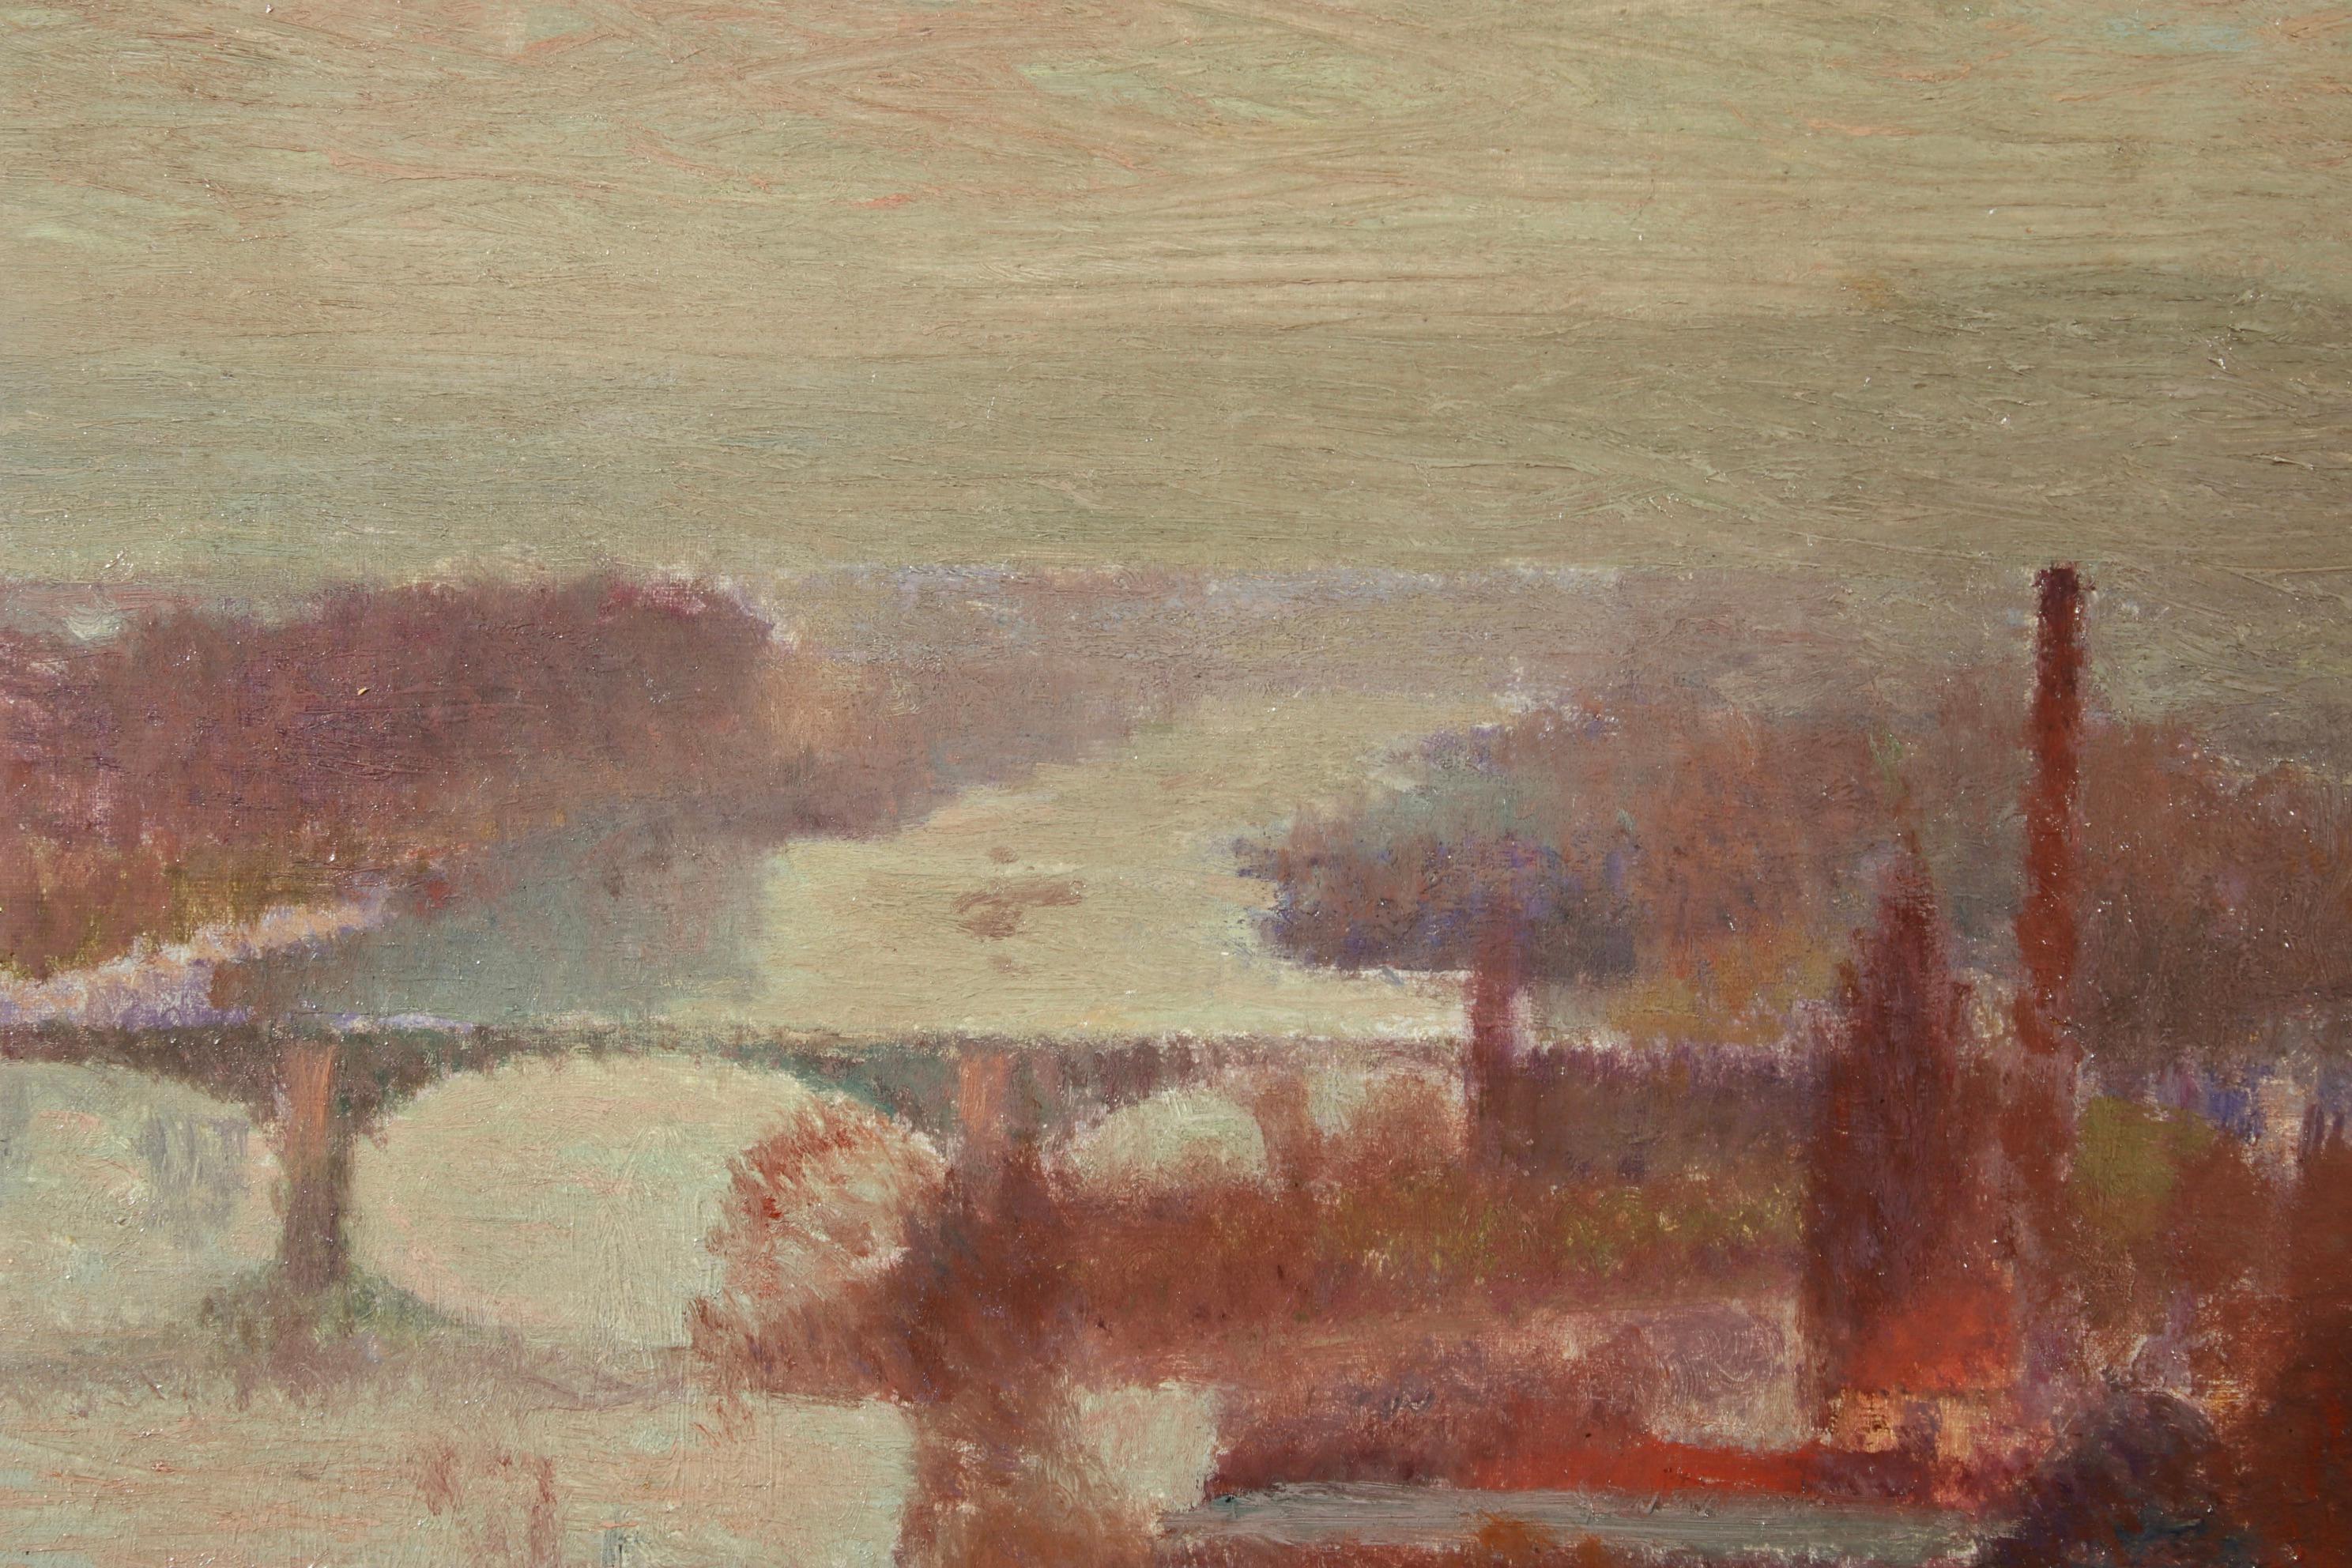 Morning Fog - Rouen - Impressionist Oil, River in Landscape by Joseph Delattre 3